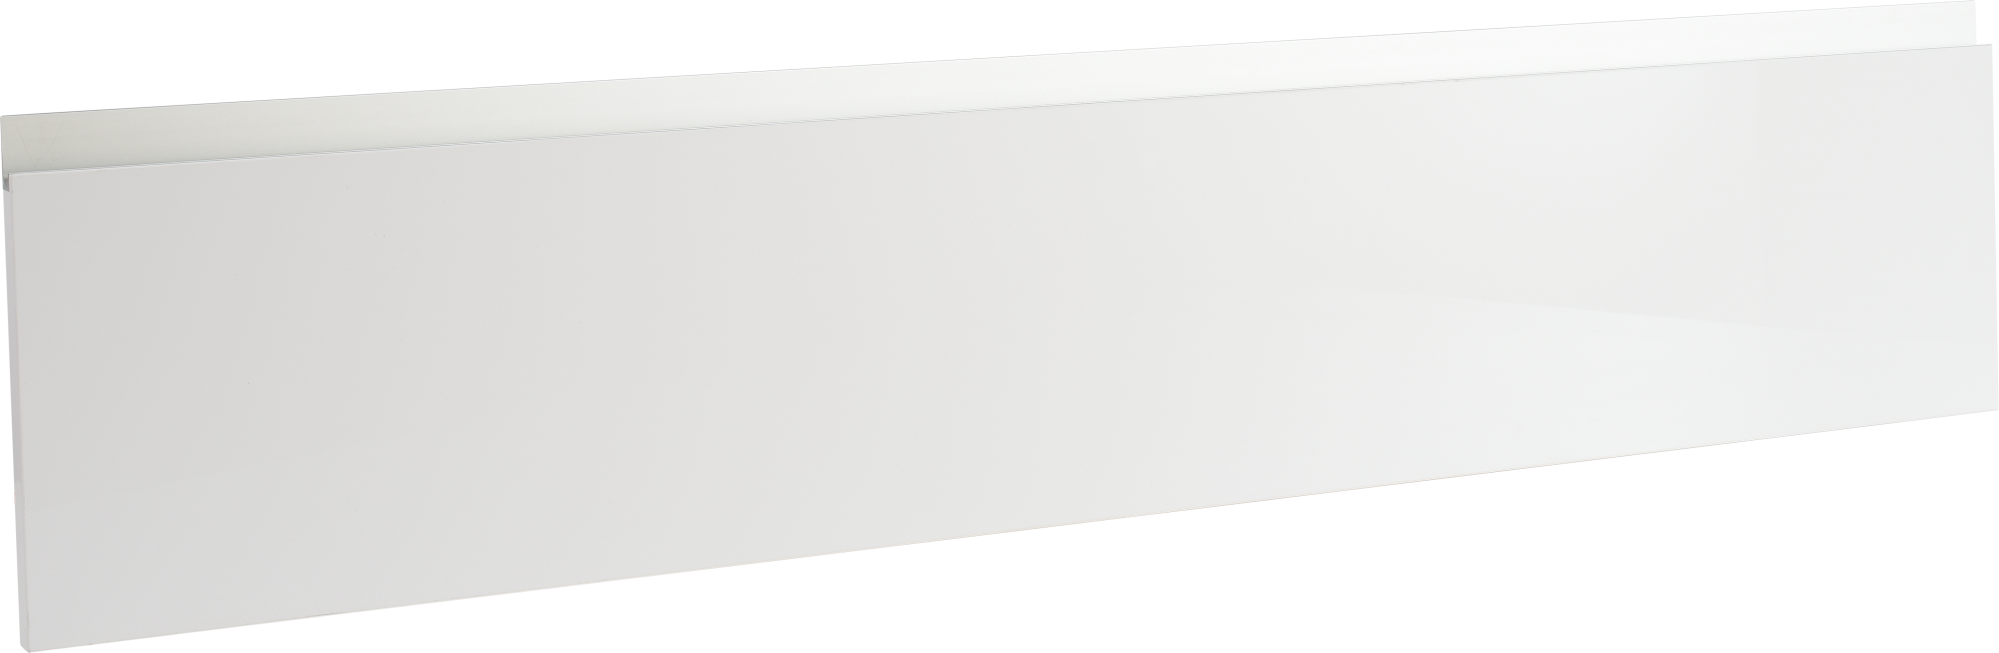 Frente para cajón mikonos blanco brillo 119,7x25,3 cm